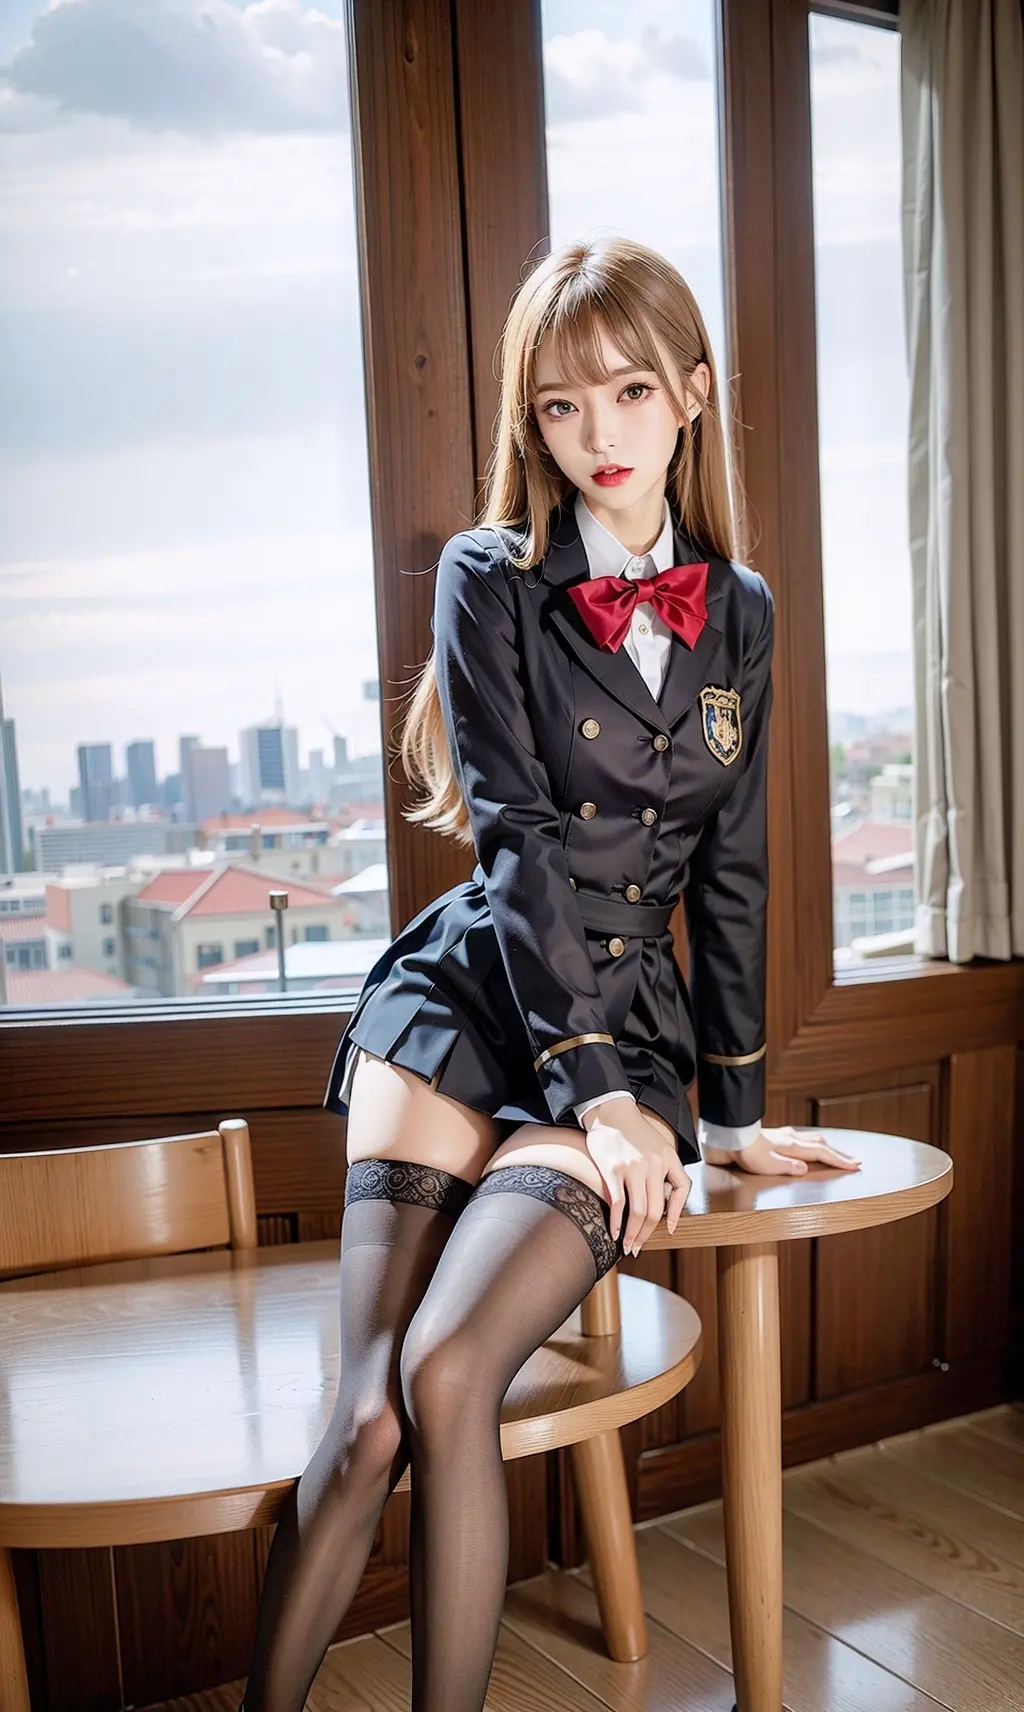 General 1024x1712 AI art black stockings school uniform Asian women legs portrait display schoolgirl bow tie stockings looking at viewer window city sitting